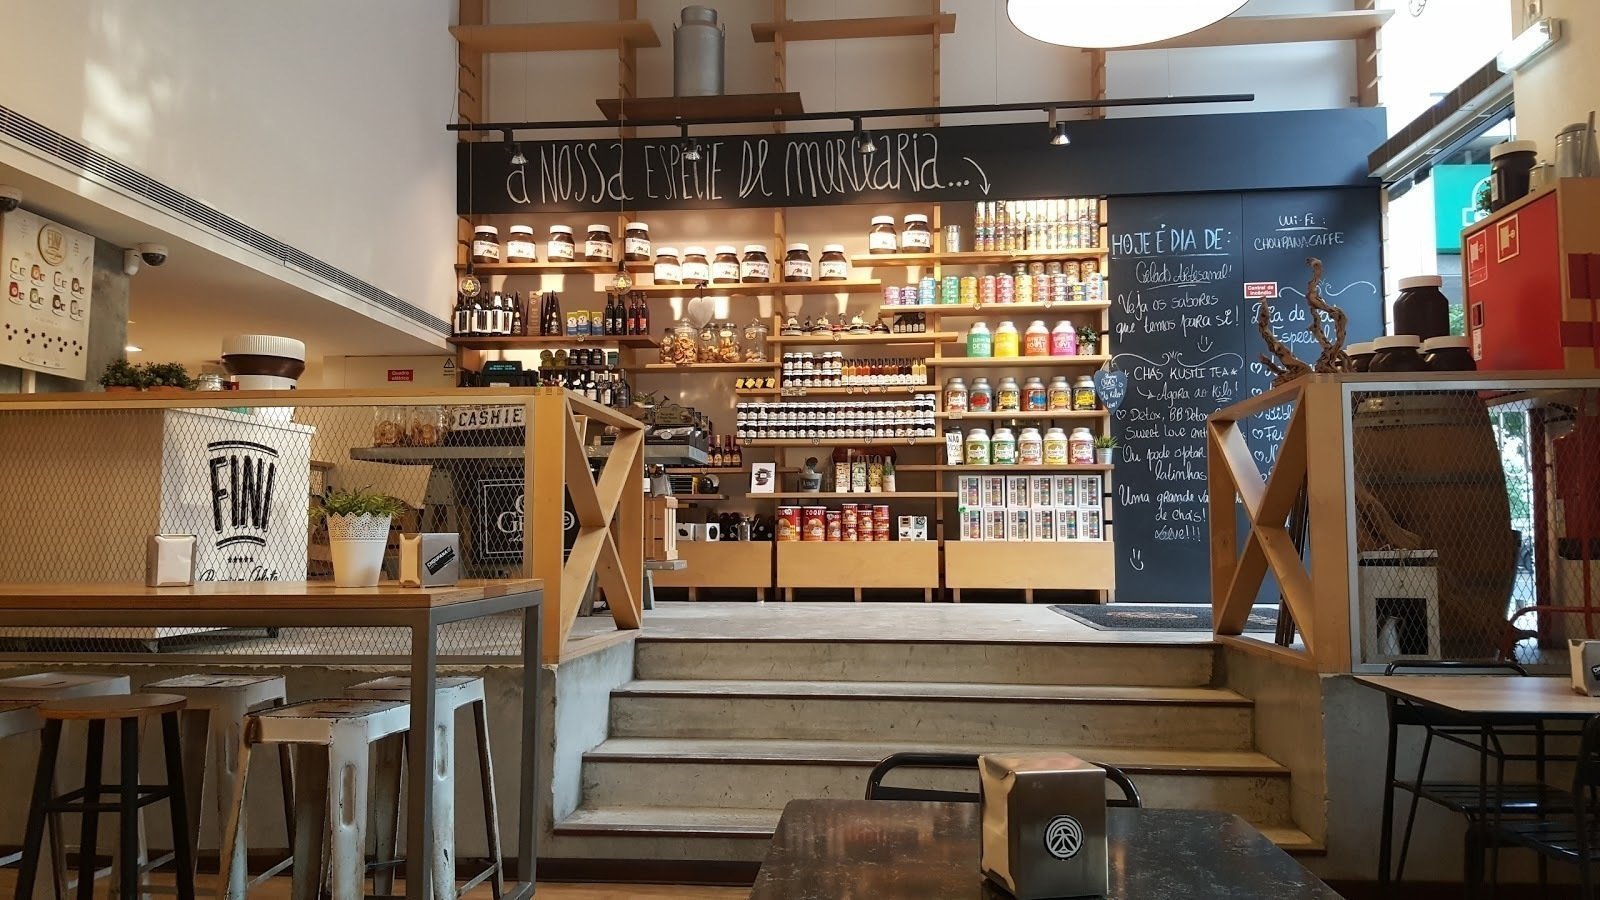 Choupana Caffé: A Work-Friendly Place in Lisbon